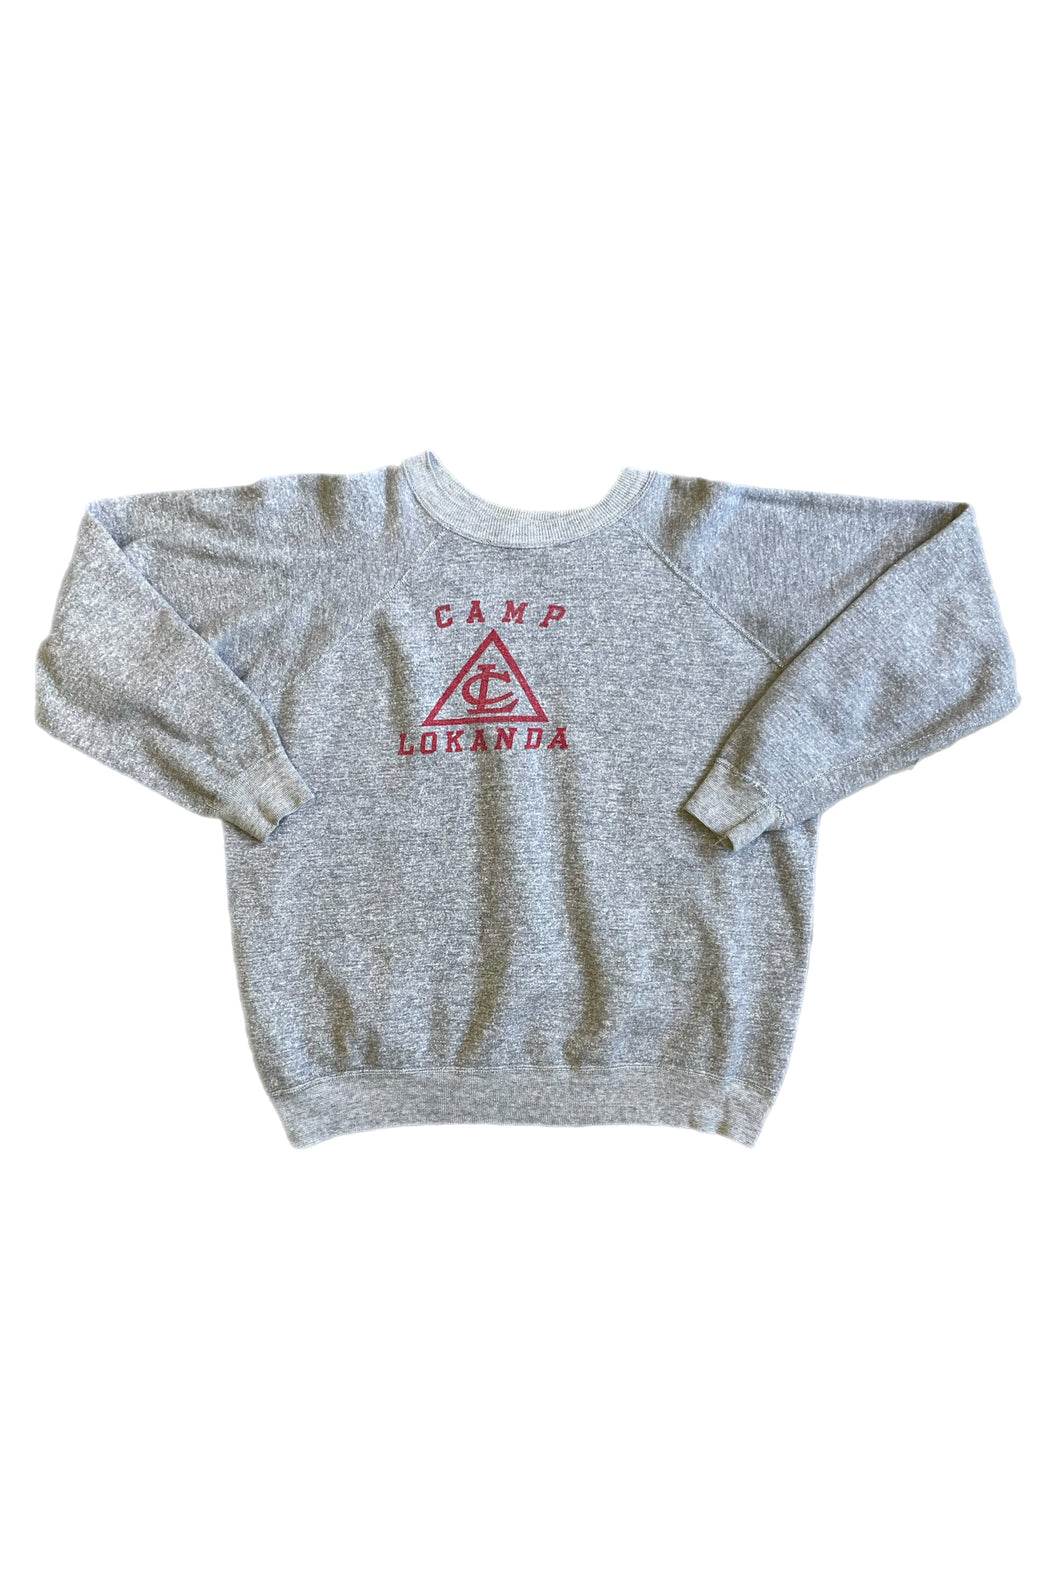 Vintage 1960's Camp Lokanda Sweatshirt